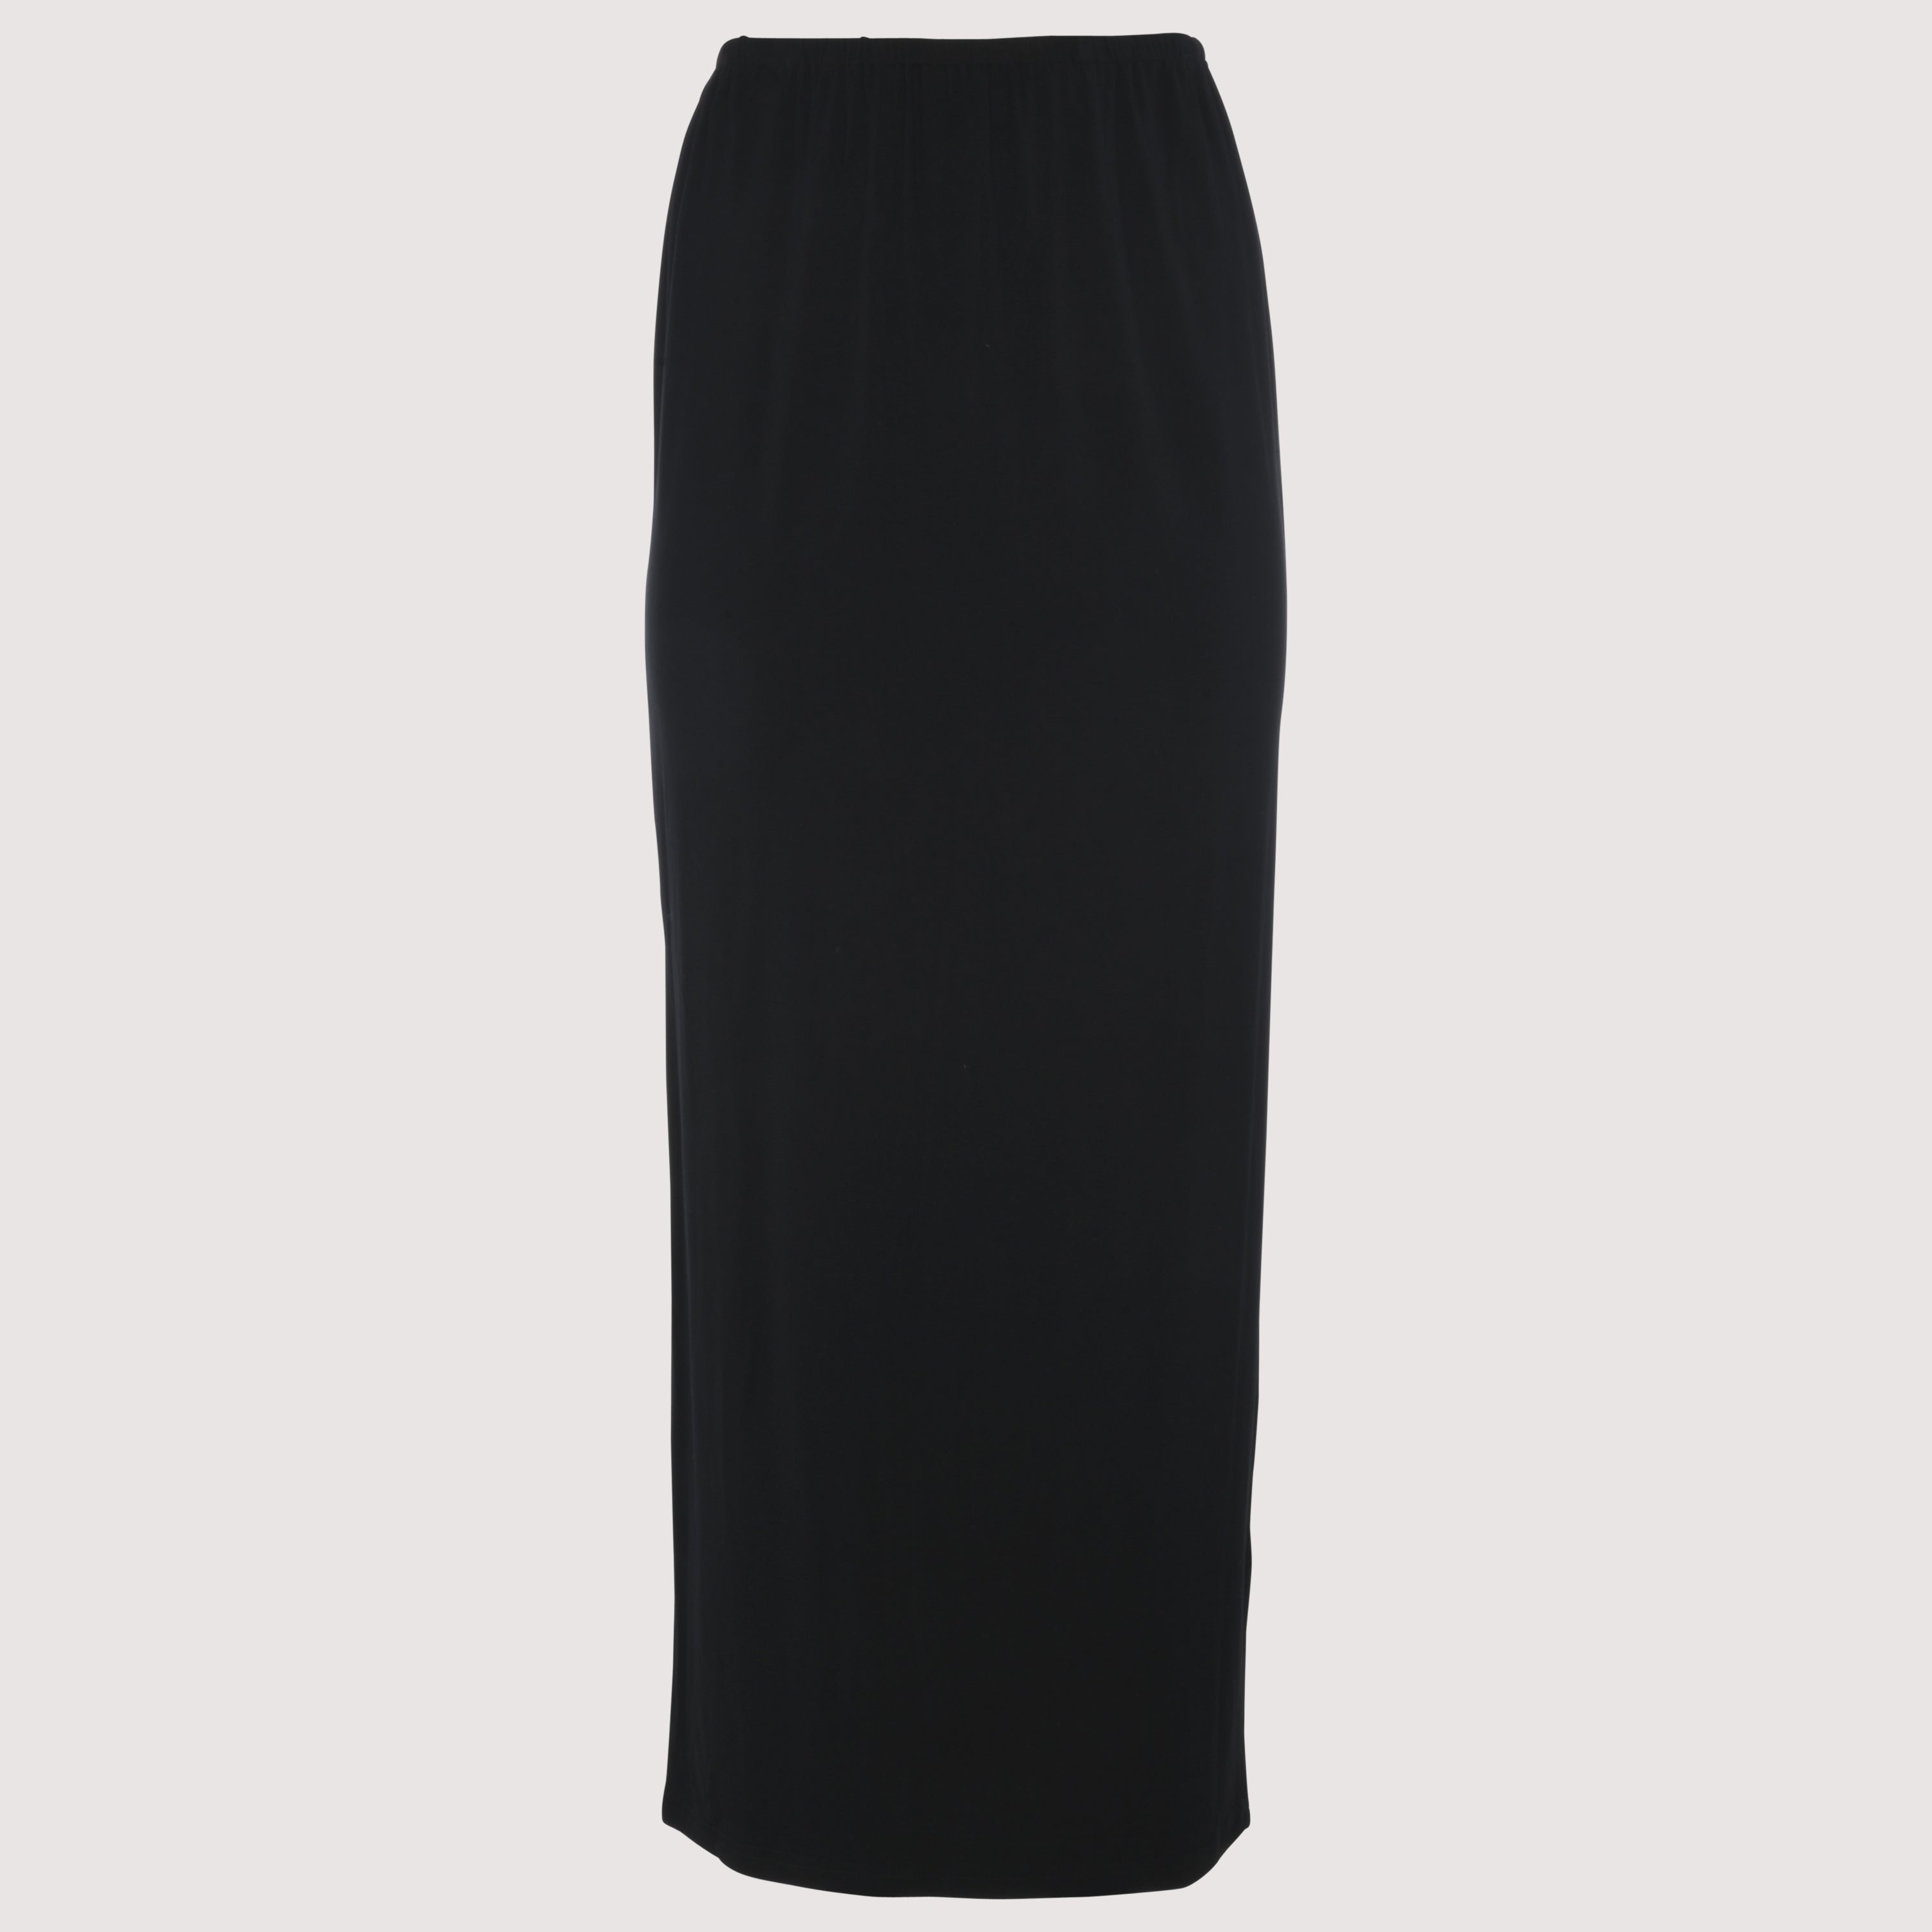 Black skirts – Theskirtstop.com